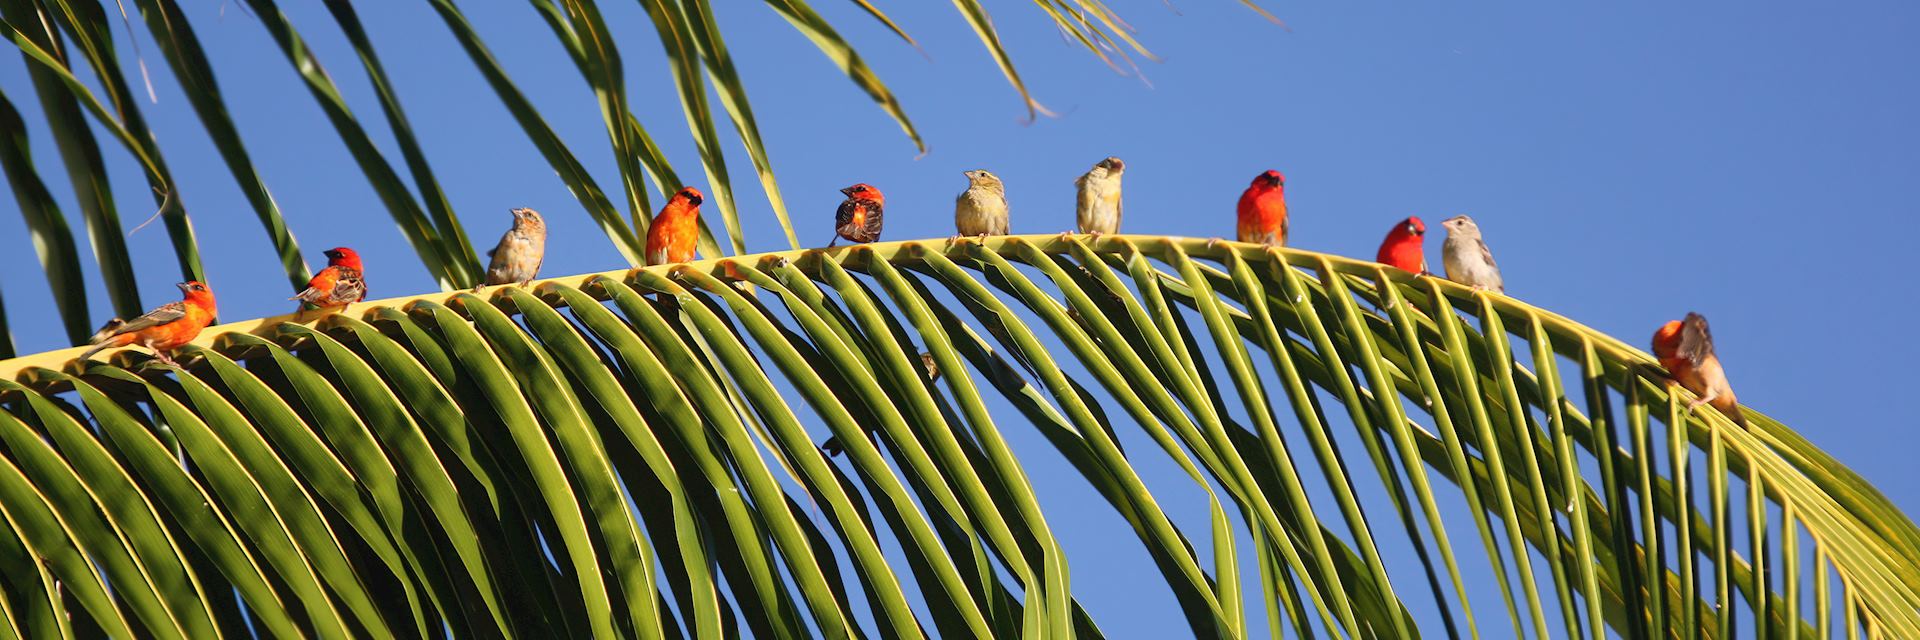 Mauritius fody birds